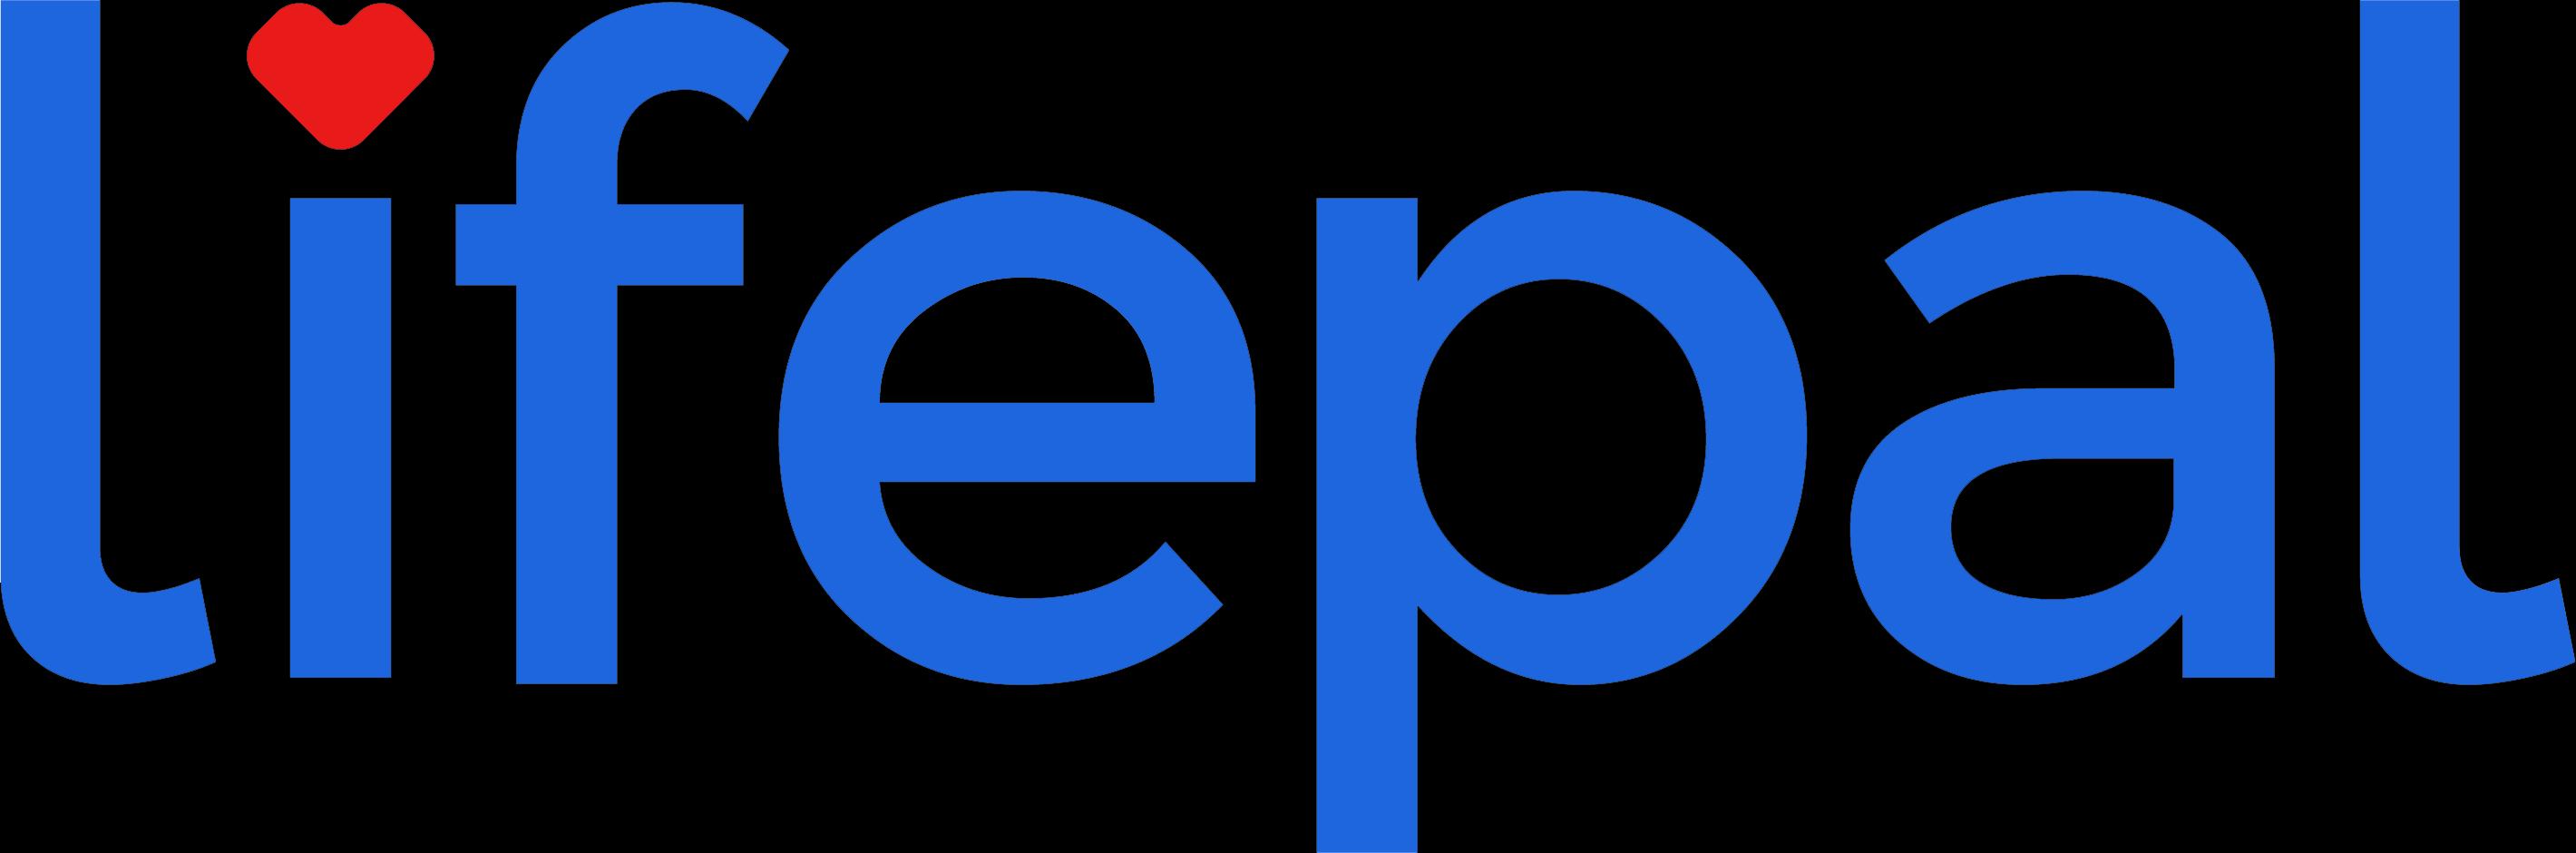 LifePal_logo